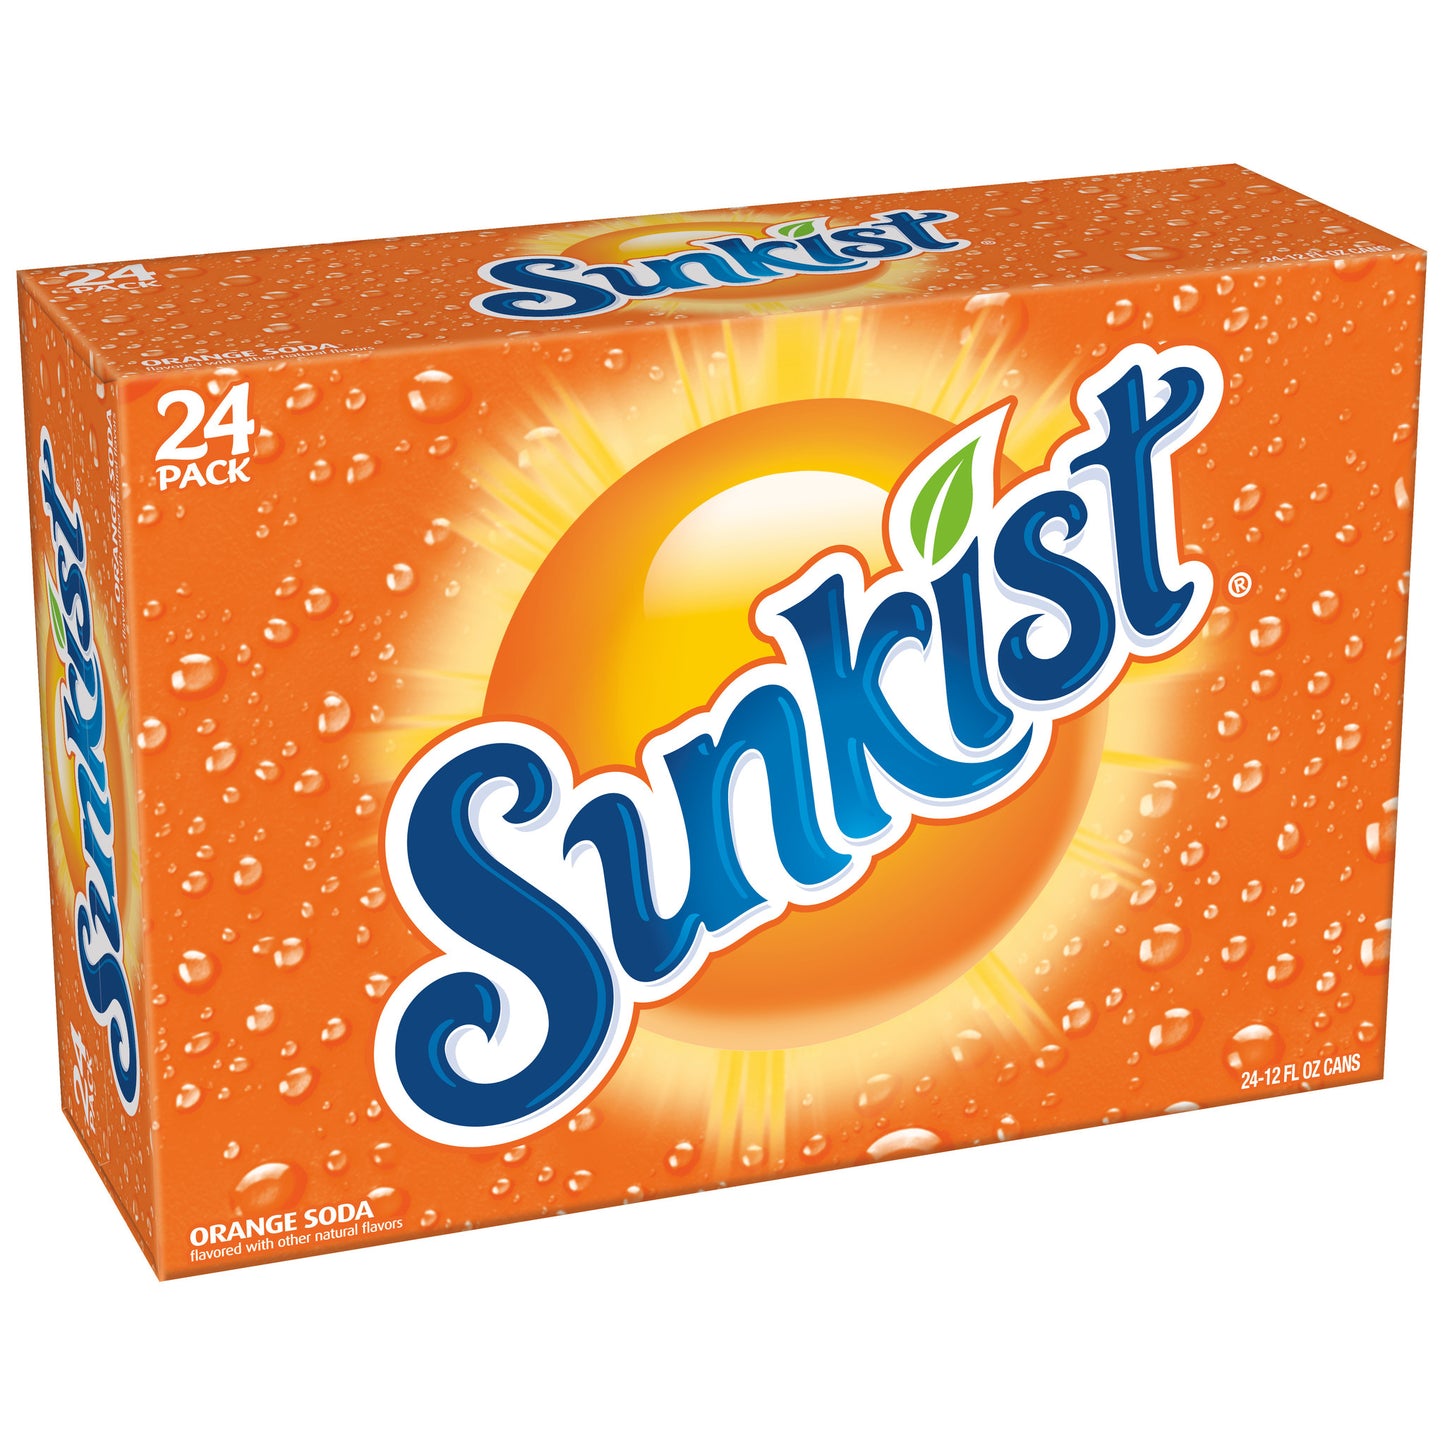 Sunkist Orange Soda (12 oz. cans, 24 pk.)